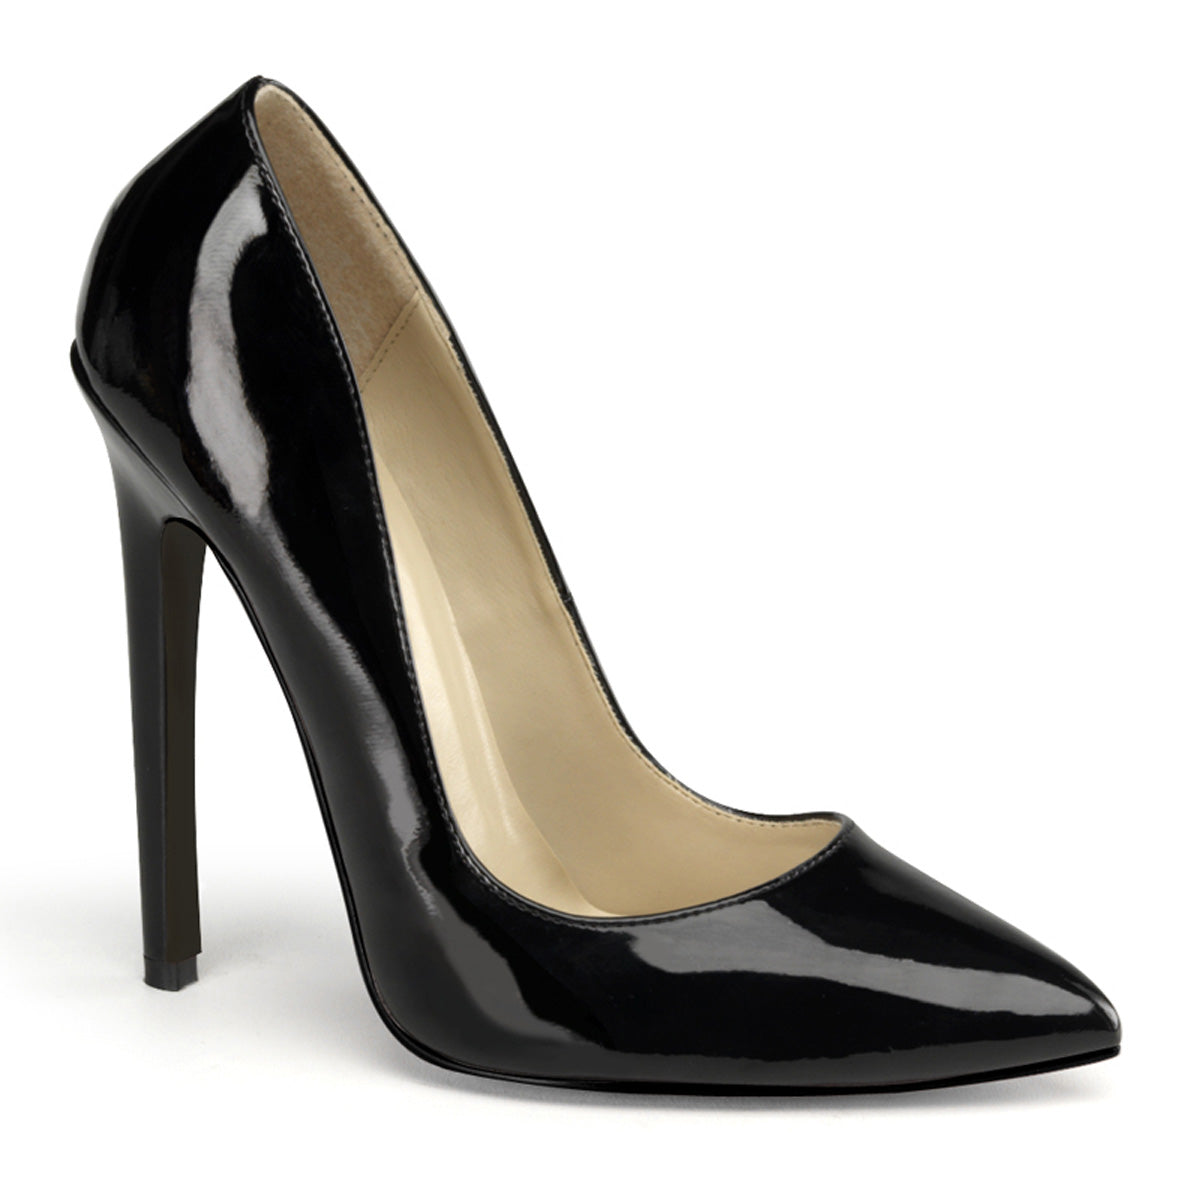 Sexy-20 Sleamer Shoes 5 "каблука черная патентная обувь фетиш